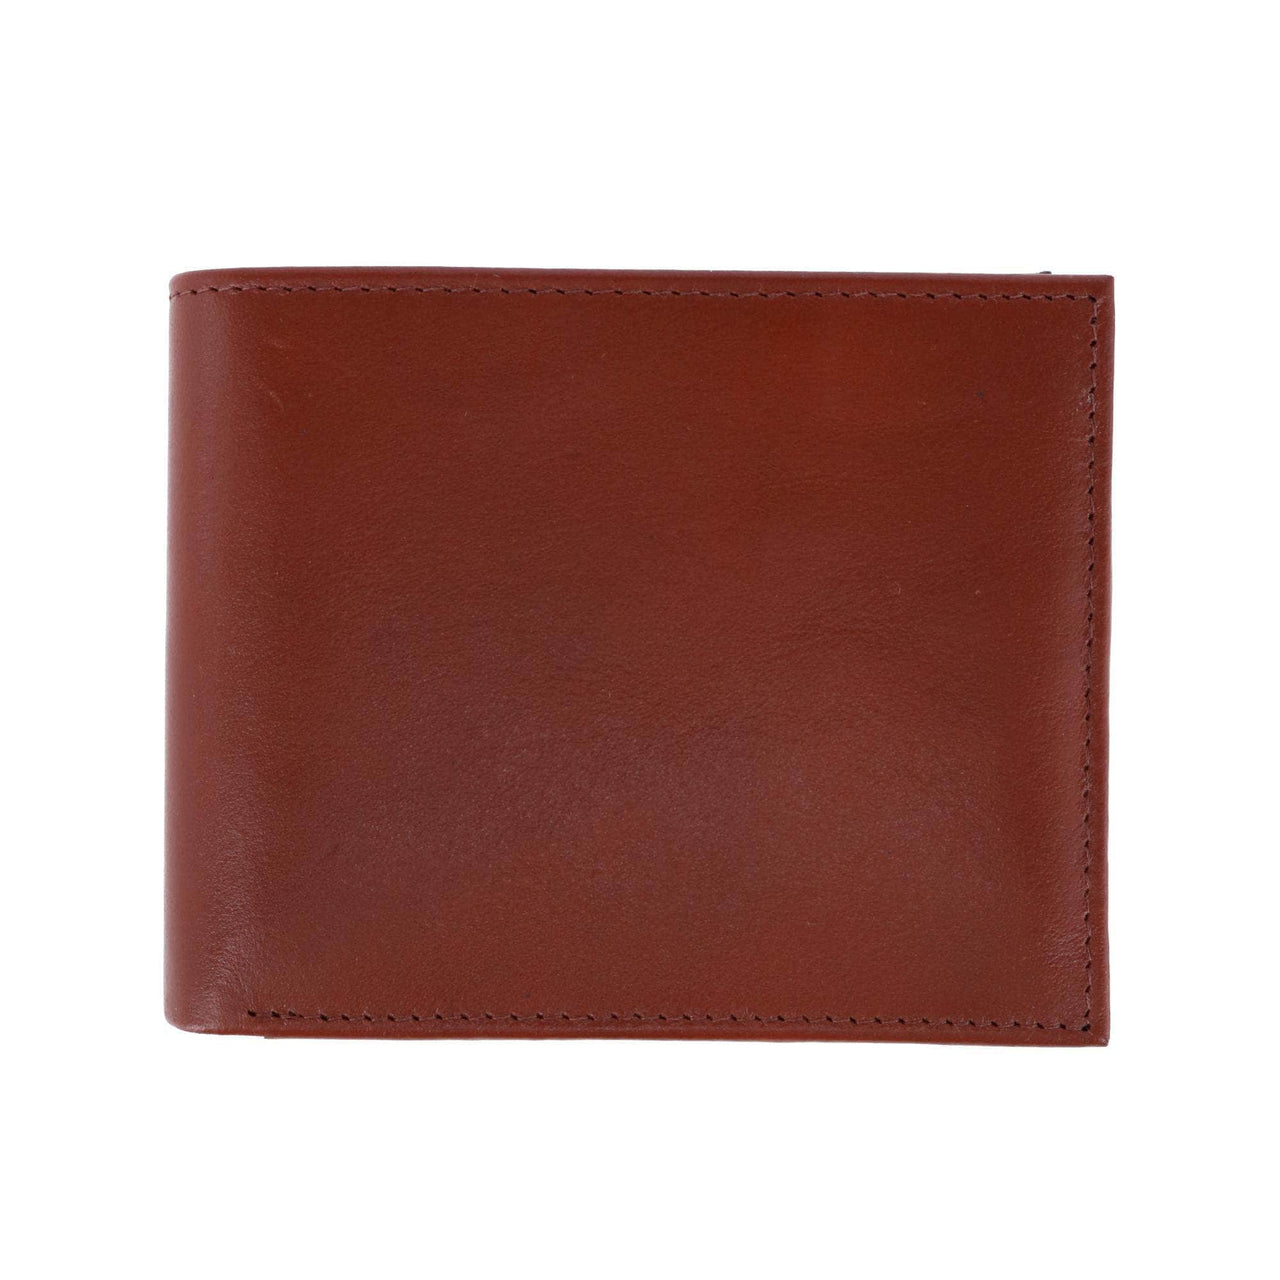 Orion Leather Bi-Fold 8 Slot Wallet